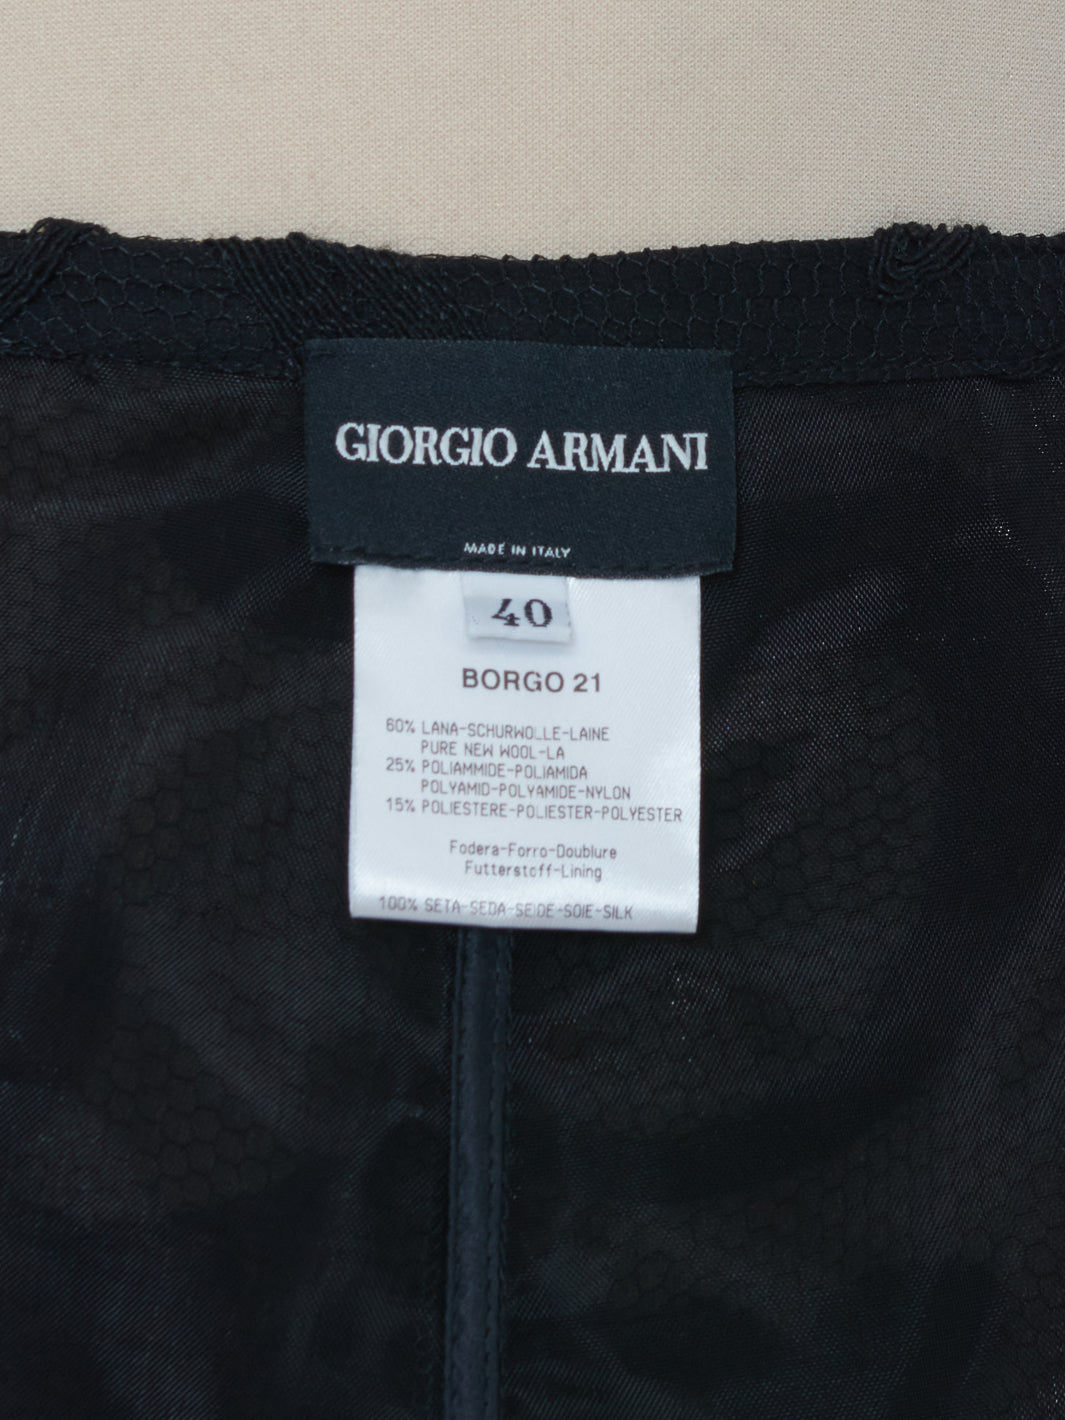 Giorgio Armani Black Lace Short Skirt